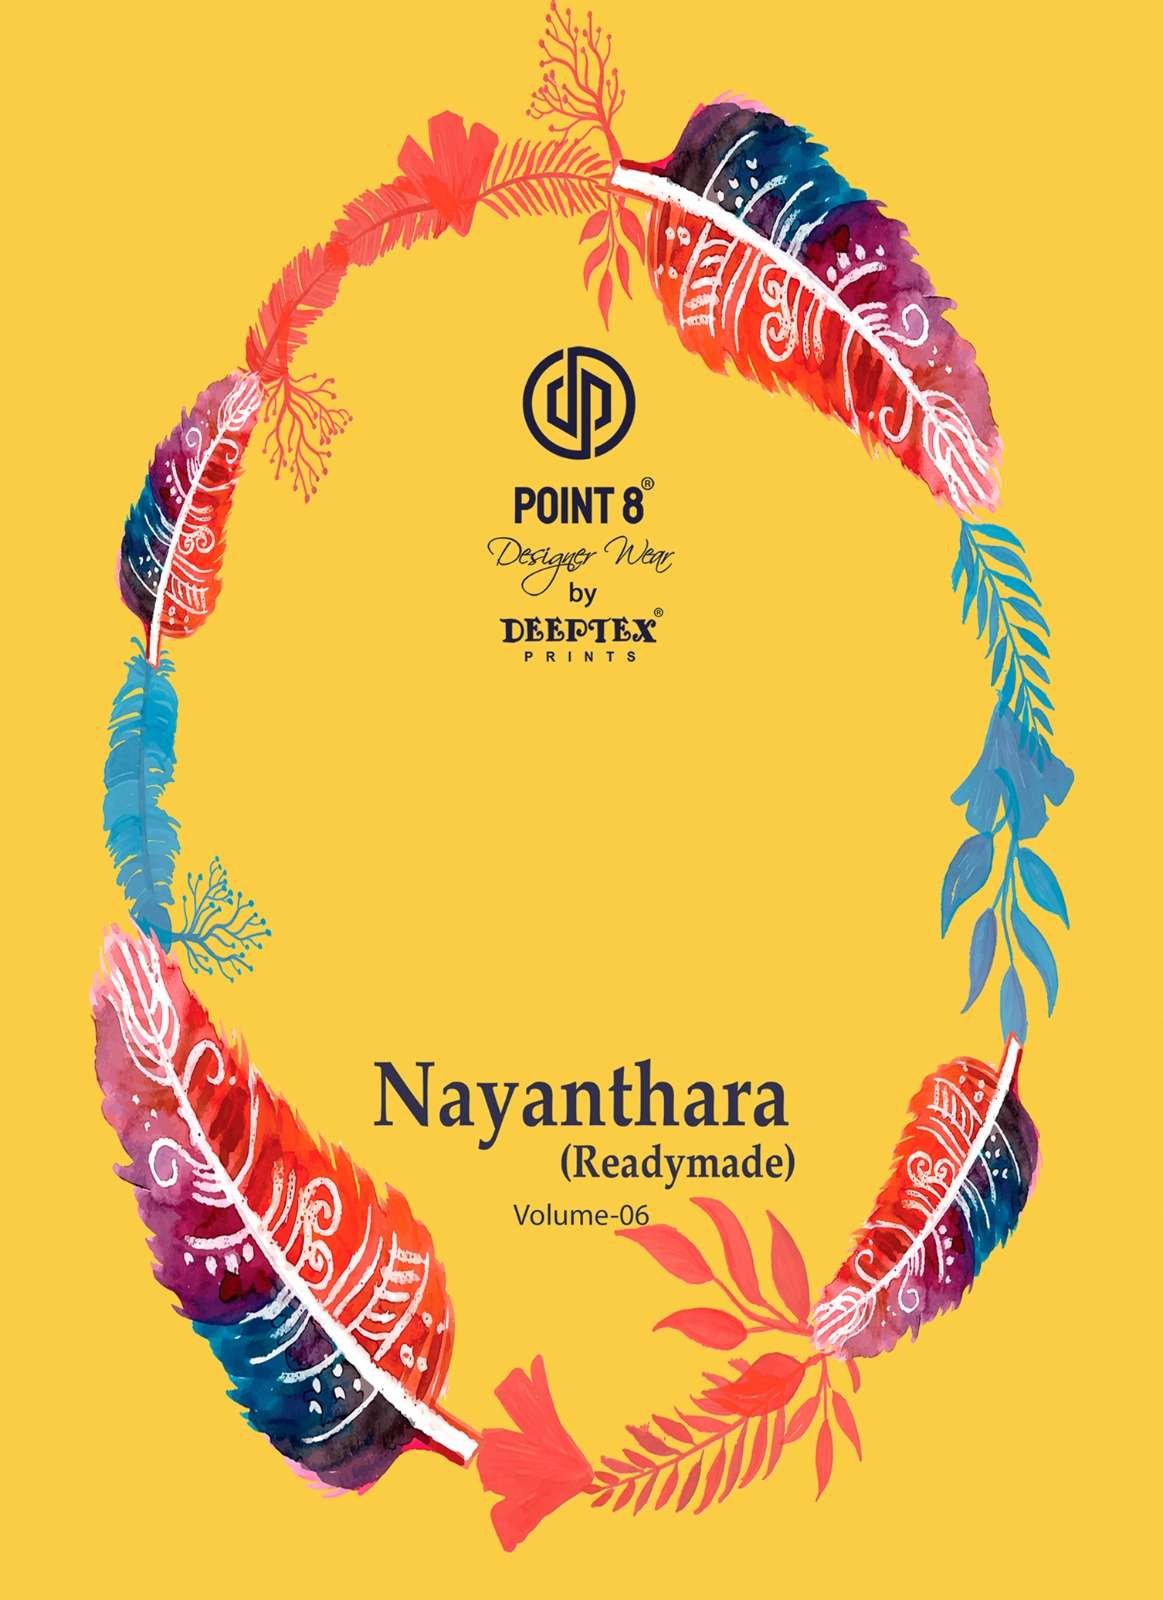 deeptex prints ponit 8 present nayanthara vol 6 readymade patiala style salwar kameez